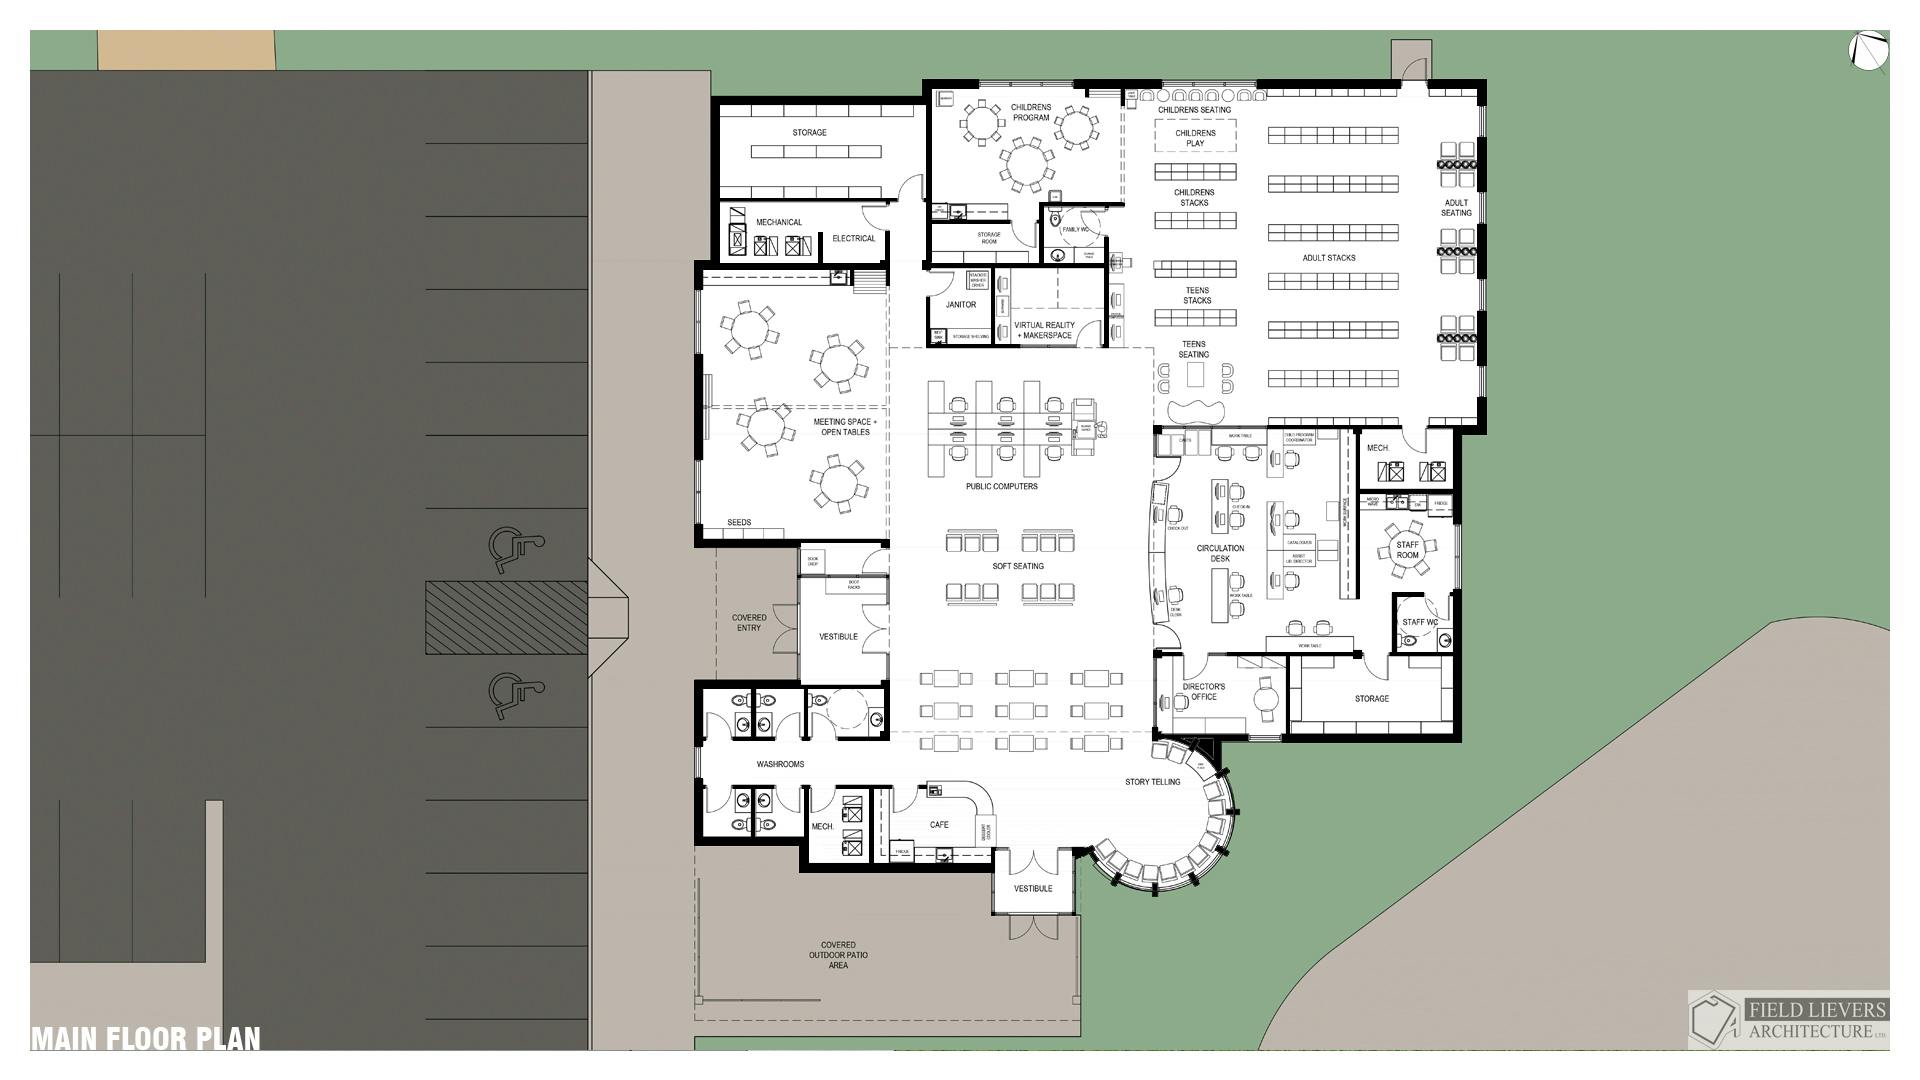 02_Main Floor Plan.jpg